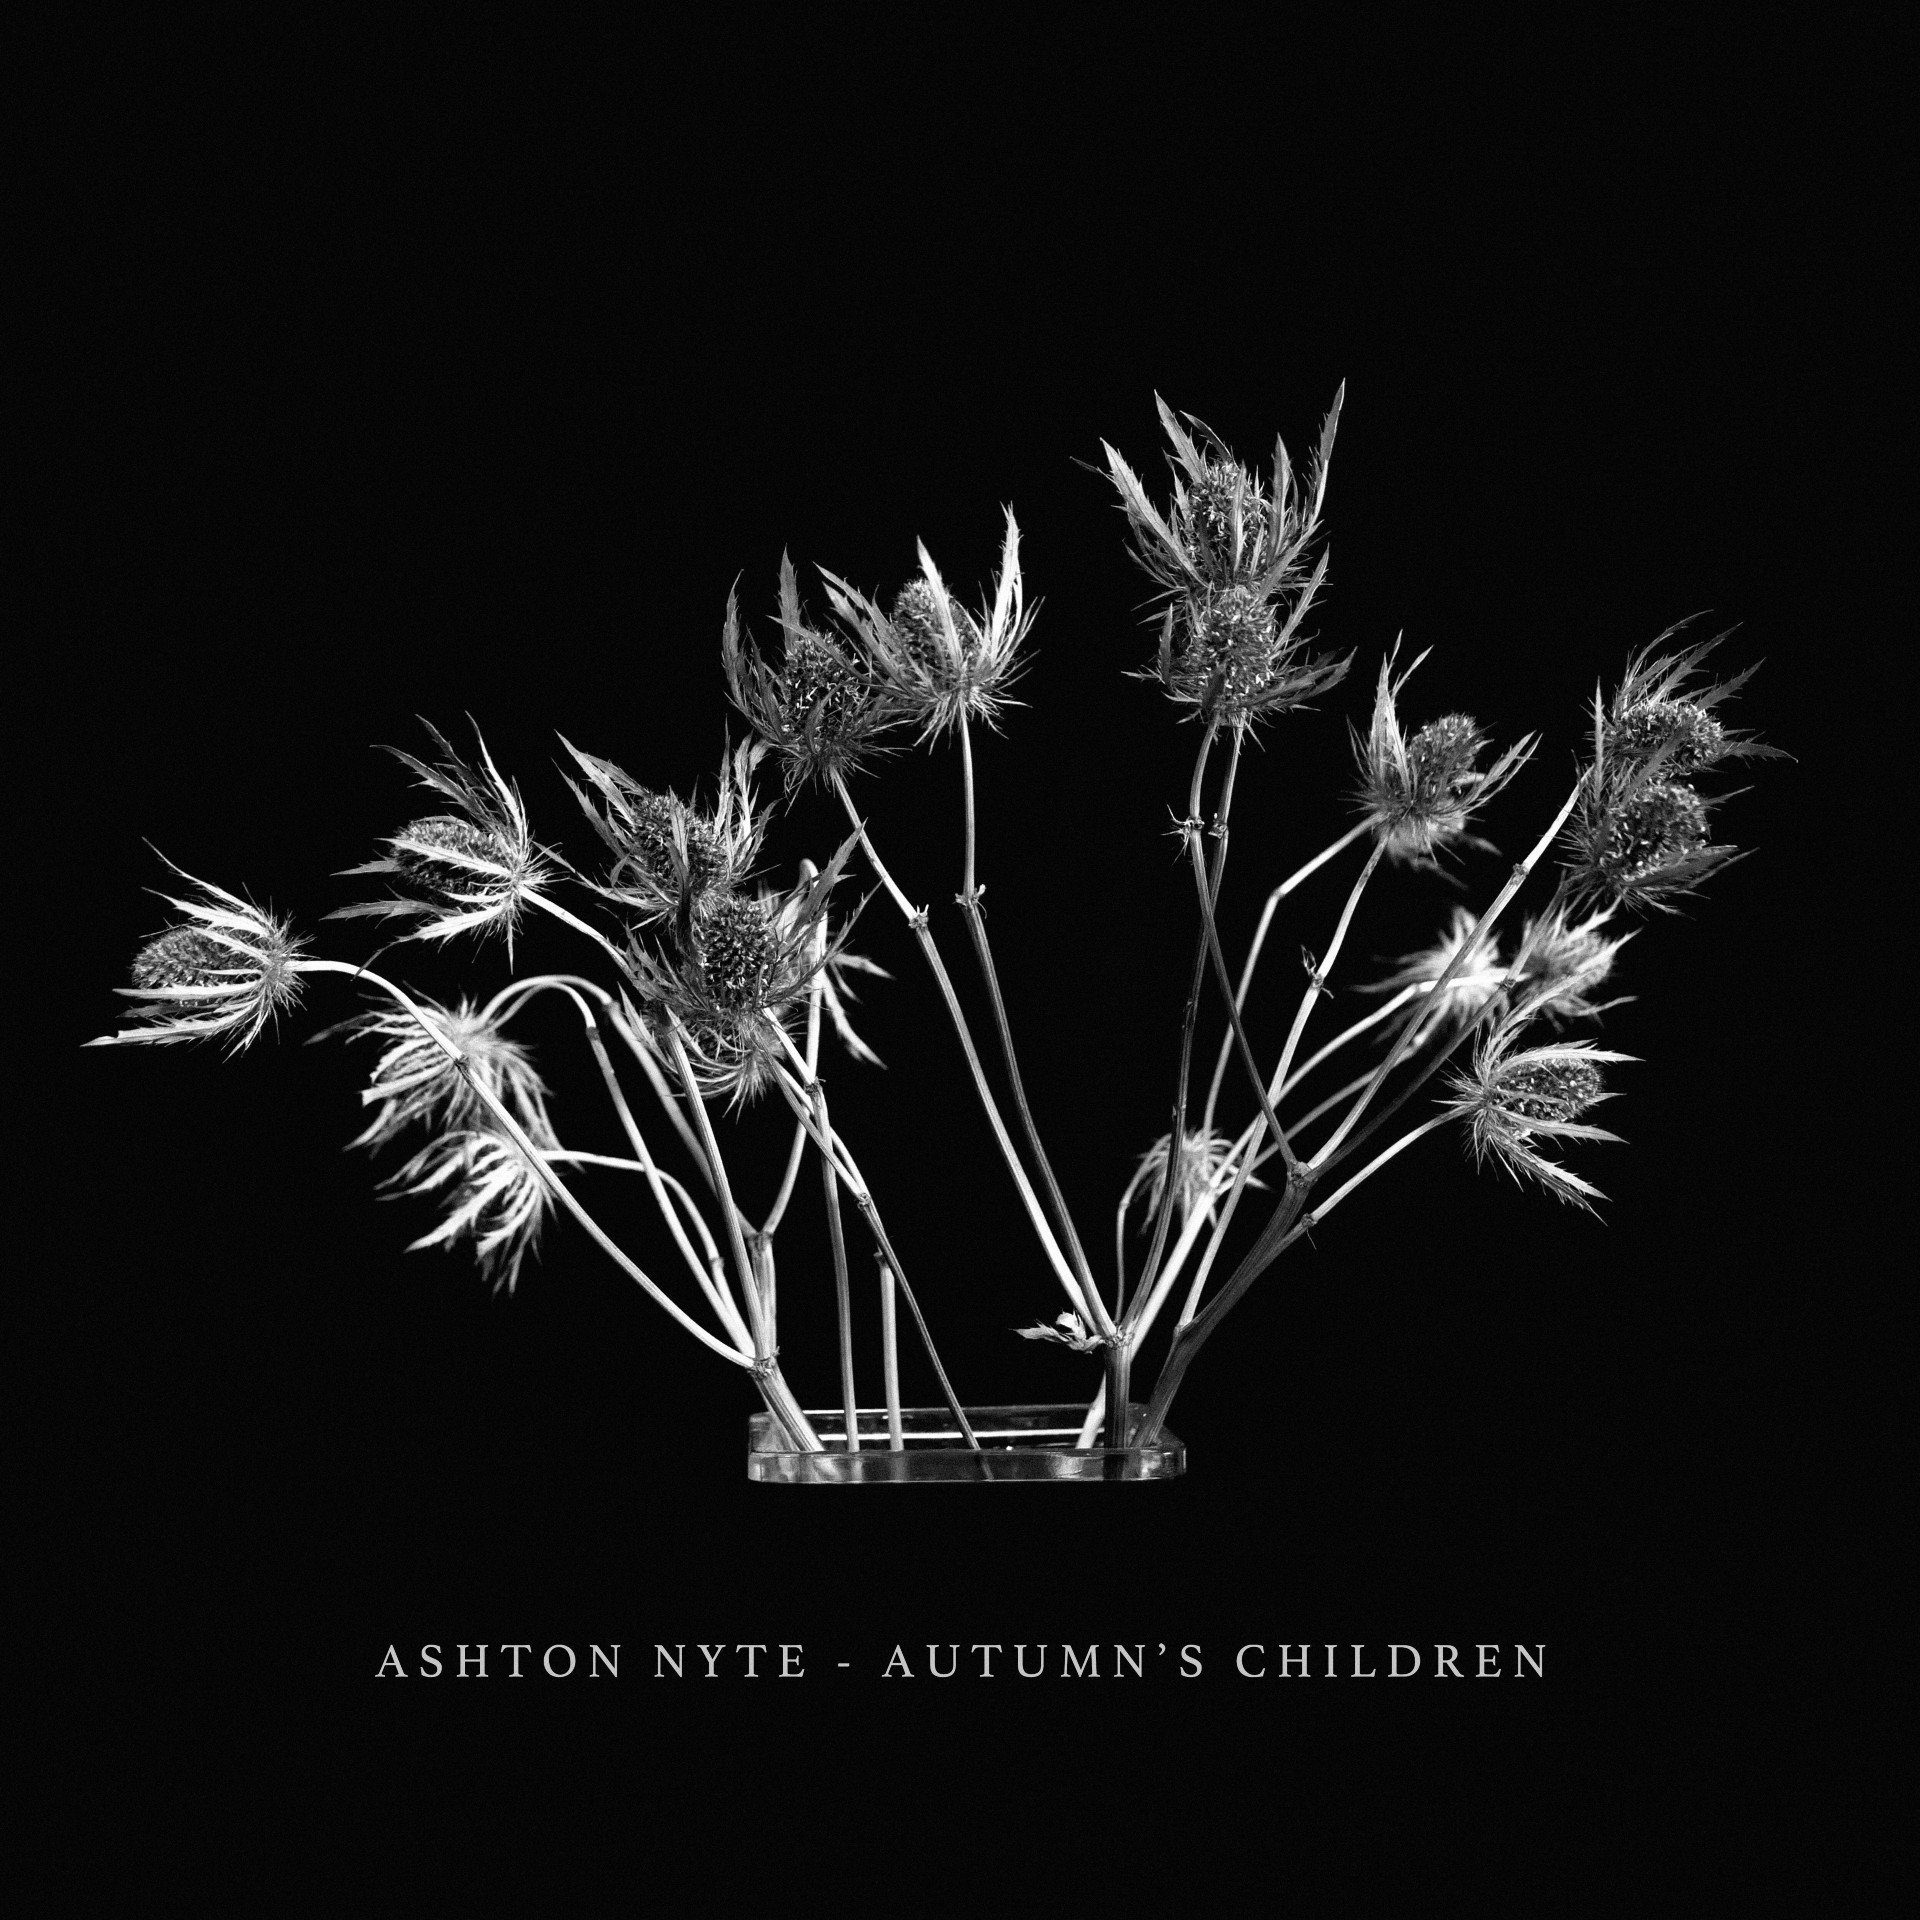 Ashton Nyte ‘Autumn’s Children’ album artwork